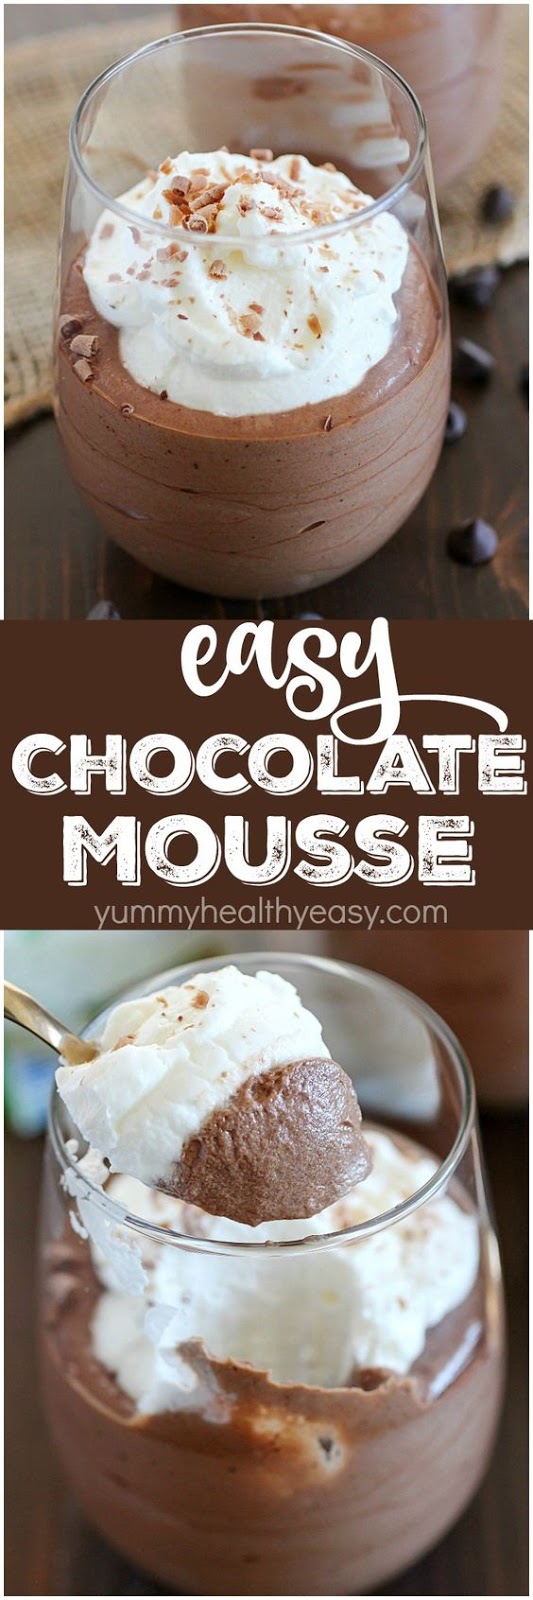 EASY CHOCOLATE MOUSSE RECIPE